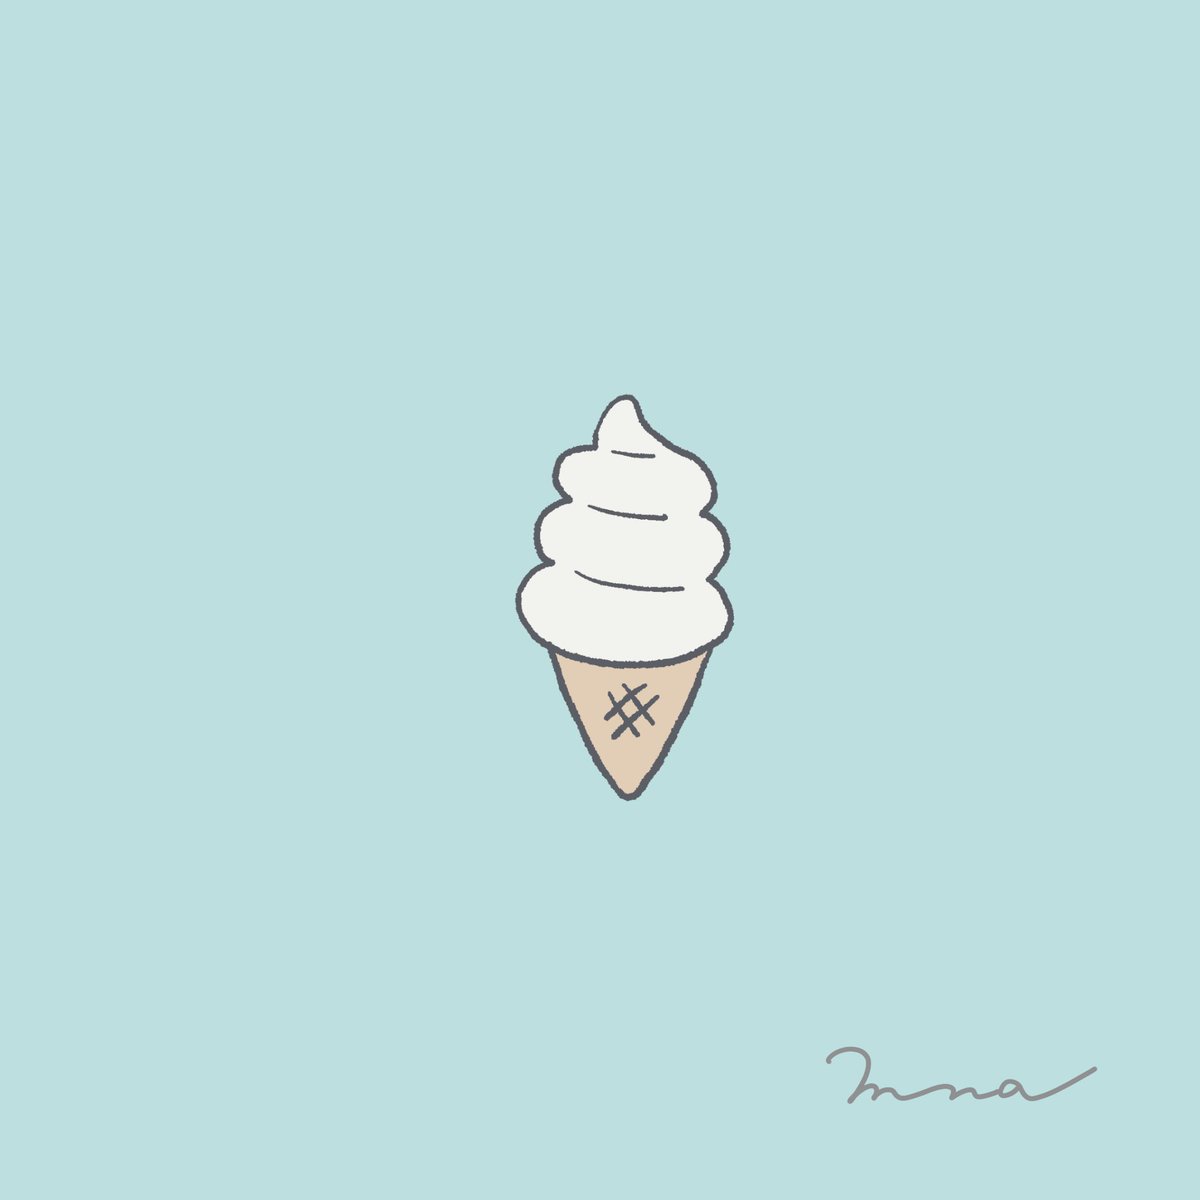 Twitter 上的 Miina ミイナ イラスト ソフトクリーム アイスクリーム アイス ストーリー 壁紙 シンプルイラスト ゆるいイラスト イラスト 線画 絵描きさんと繋がりたい イラスト好きな人と繋がりたい 保育 保育イラスト 韓国イラスト 韓国